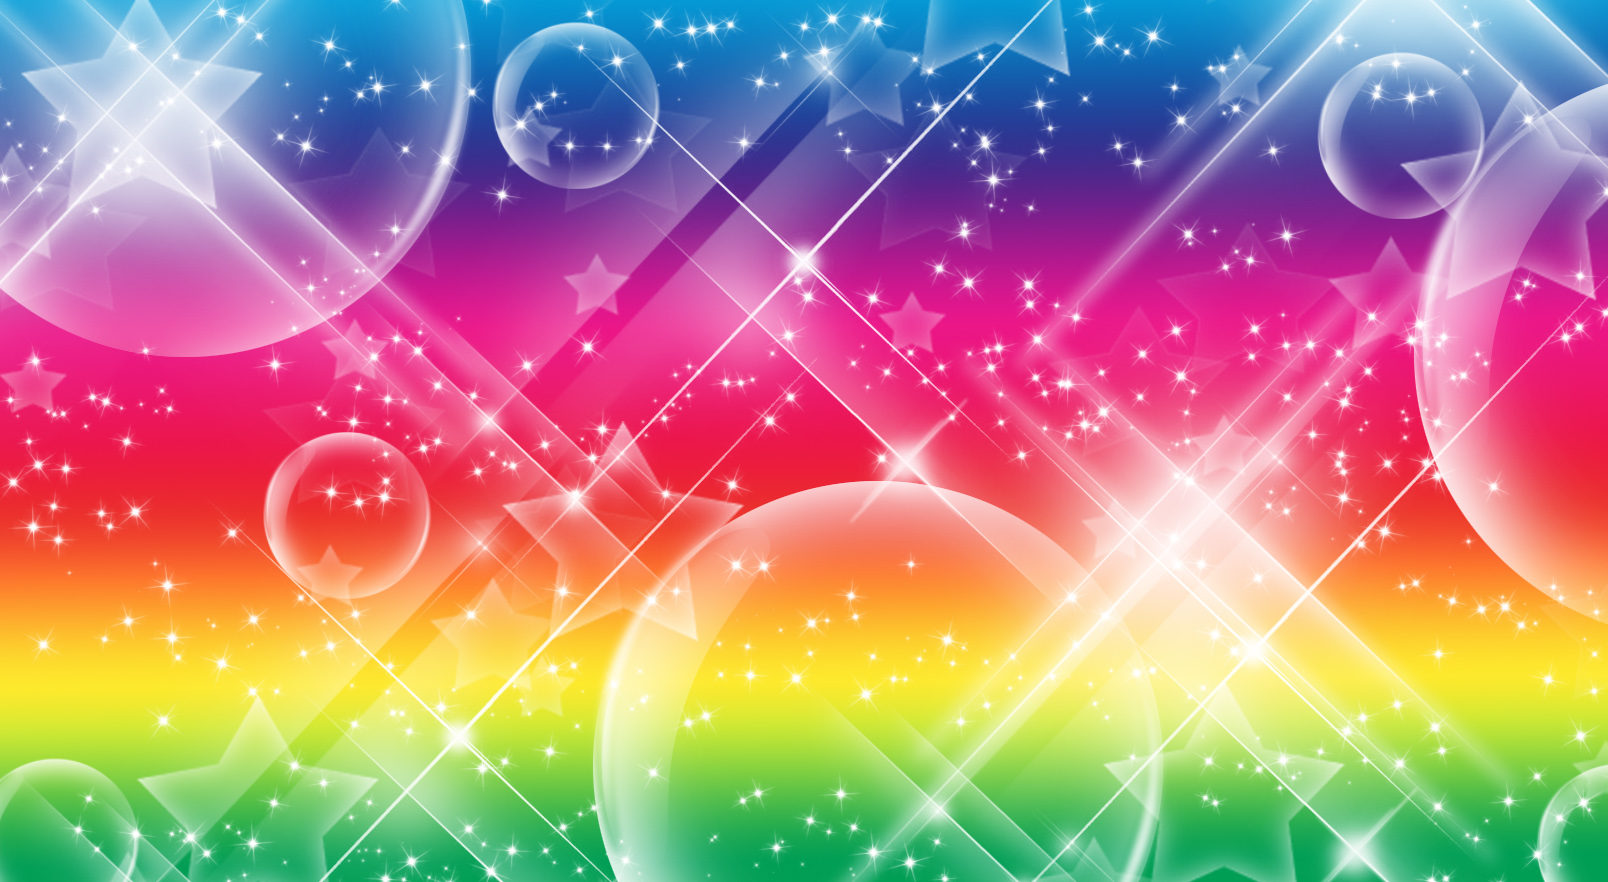 Rainbow Sparklestar Background By Yuninaoki